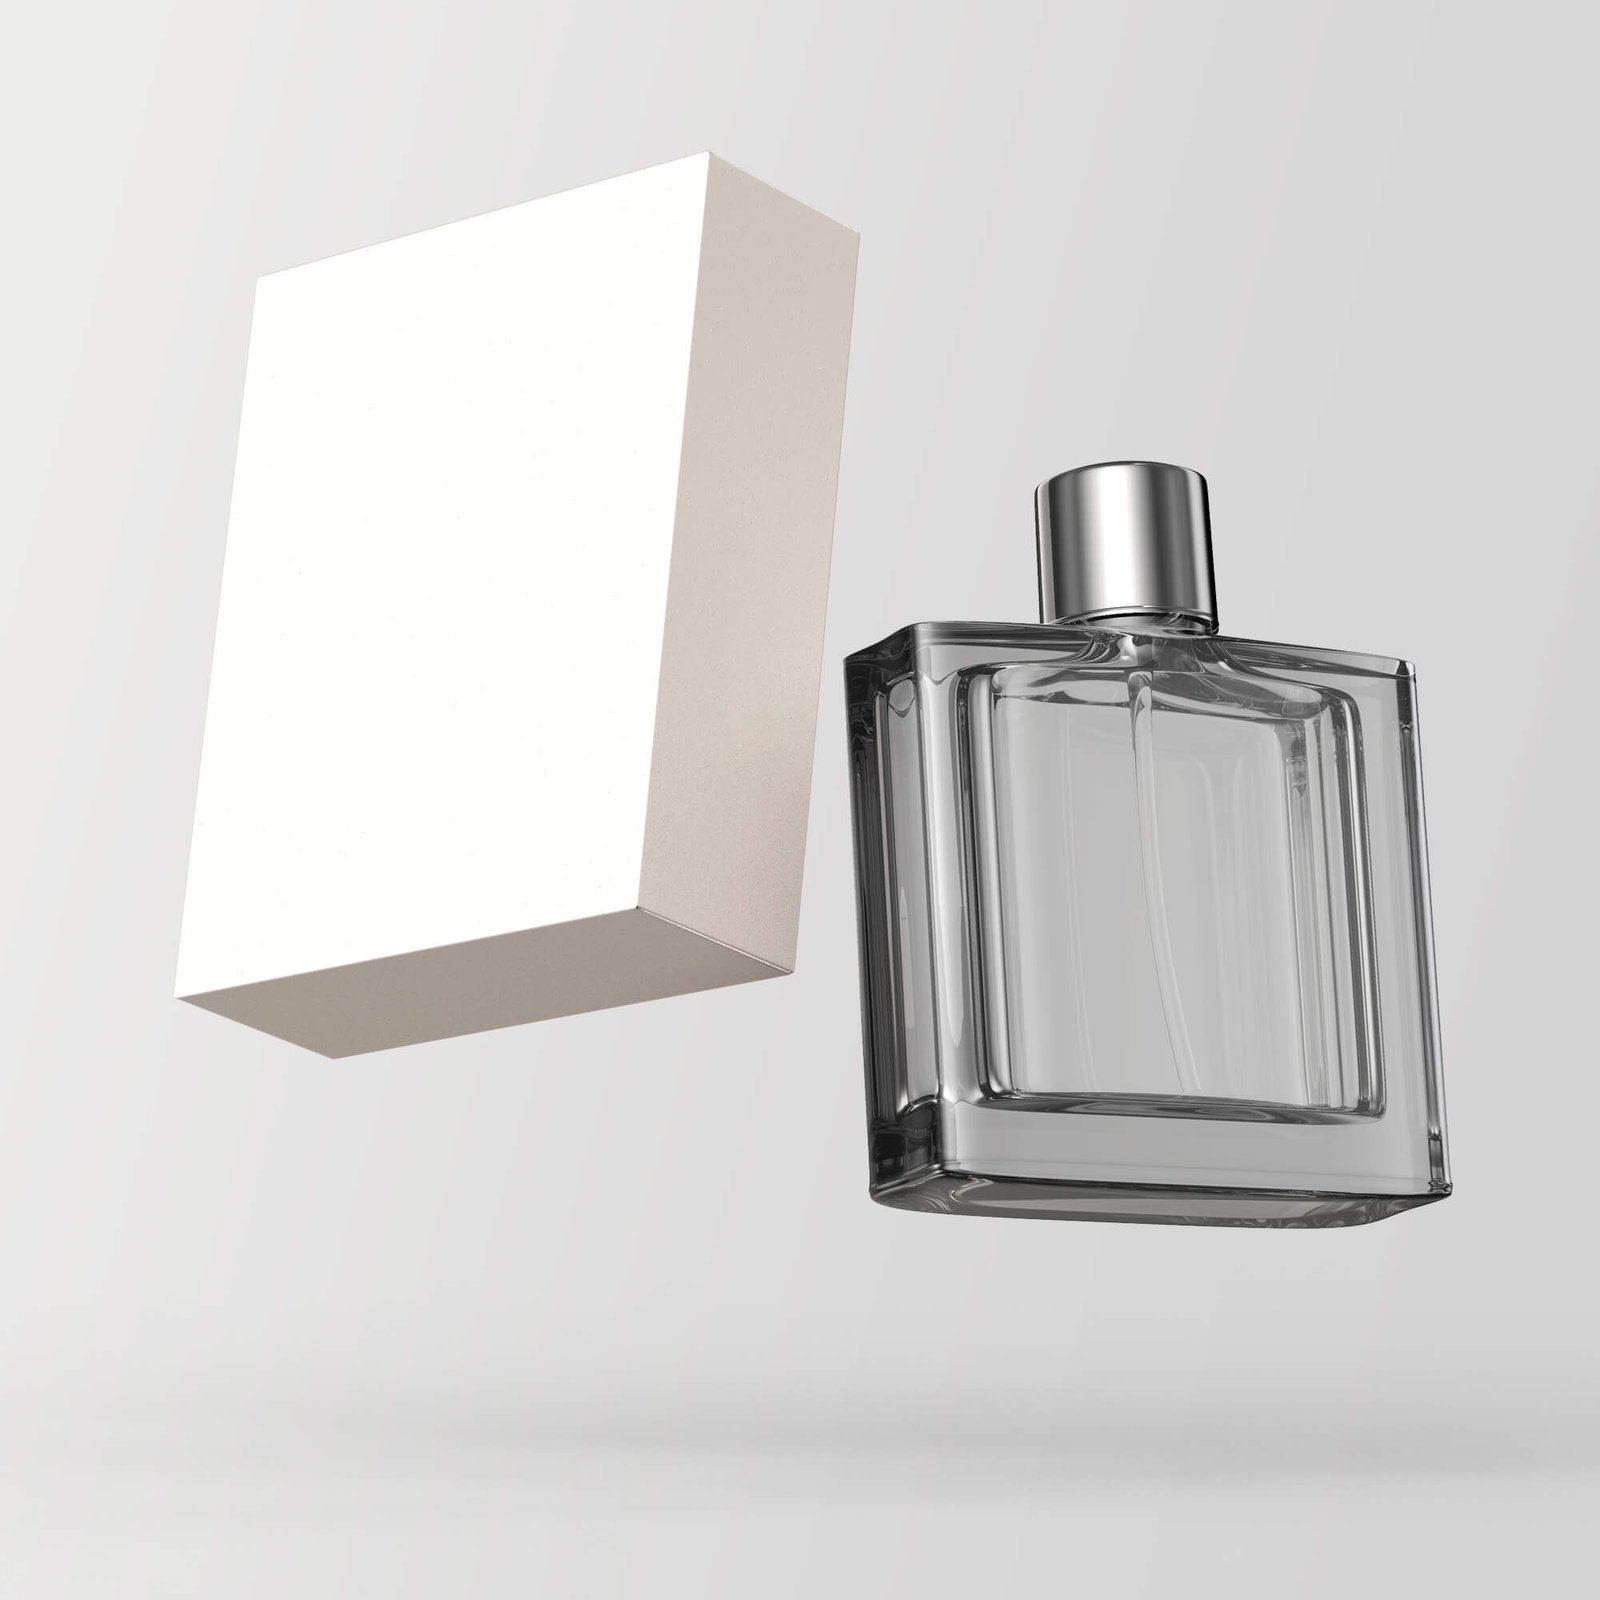 Blank Free Perfume Box Mockup PSD Template